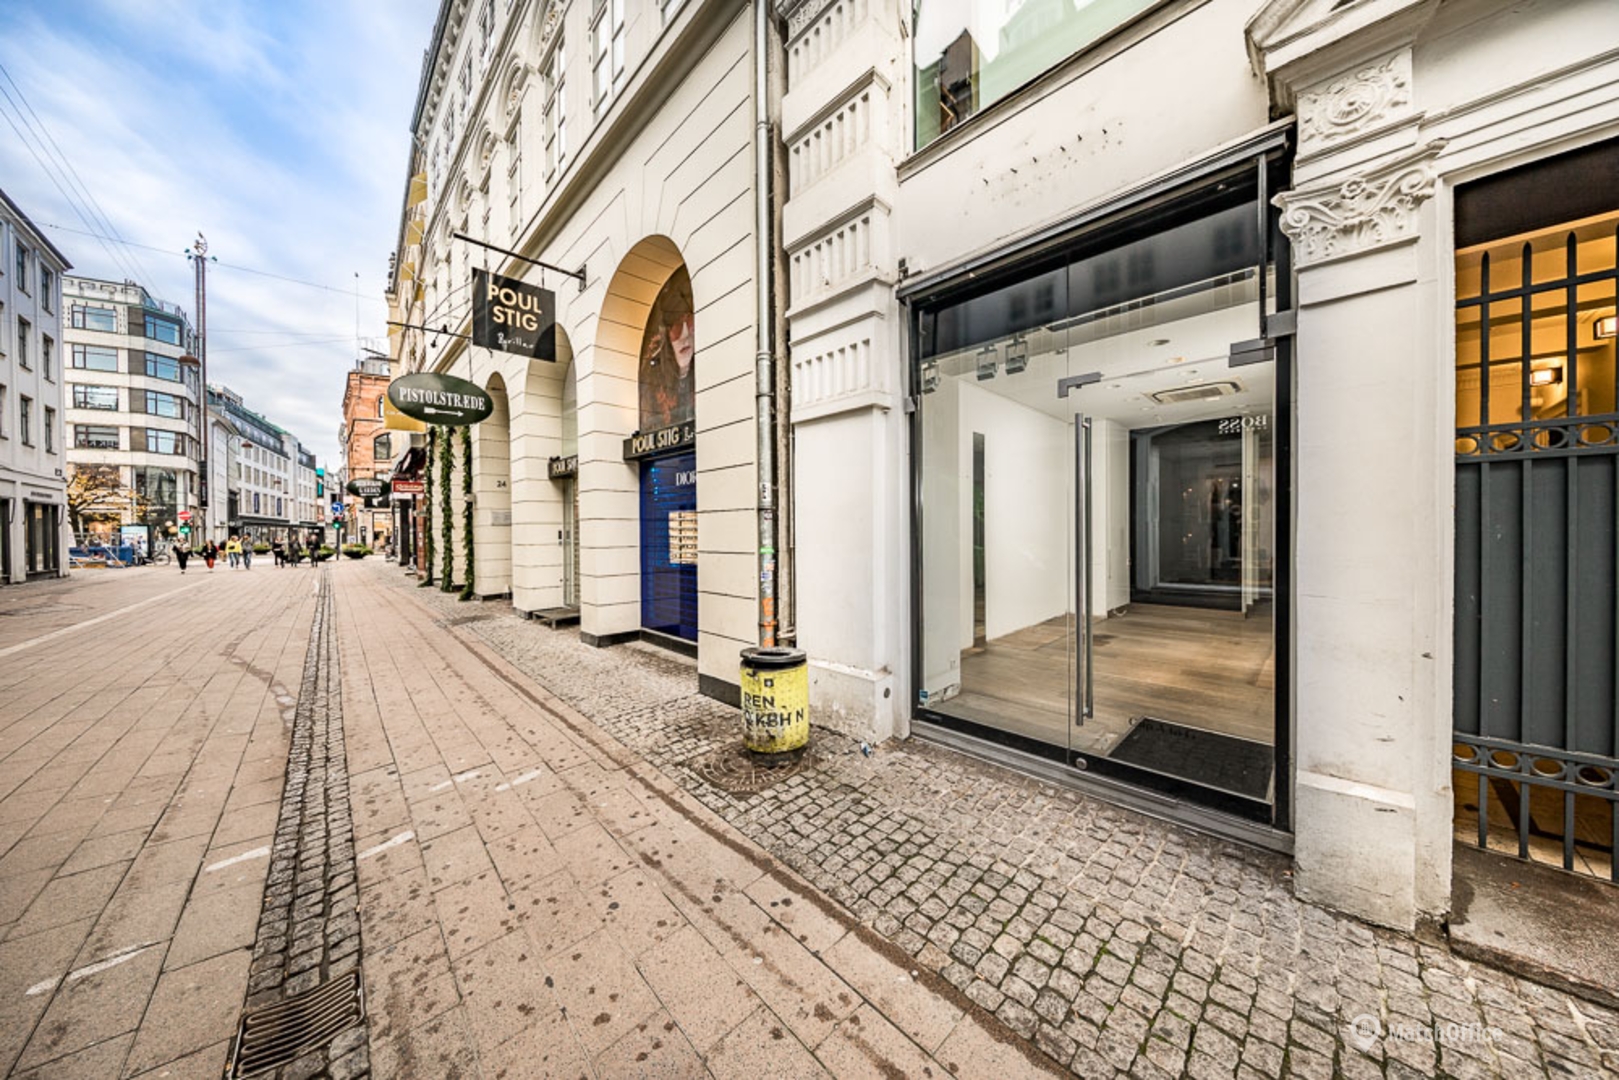 commercial store up for rent Copenhagen City Center ✓ MatchOffice.com